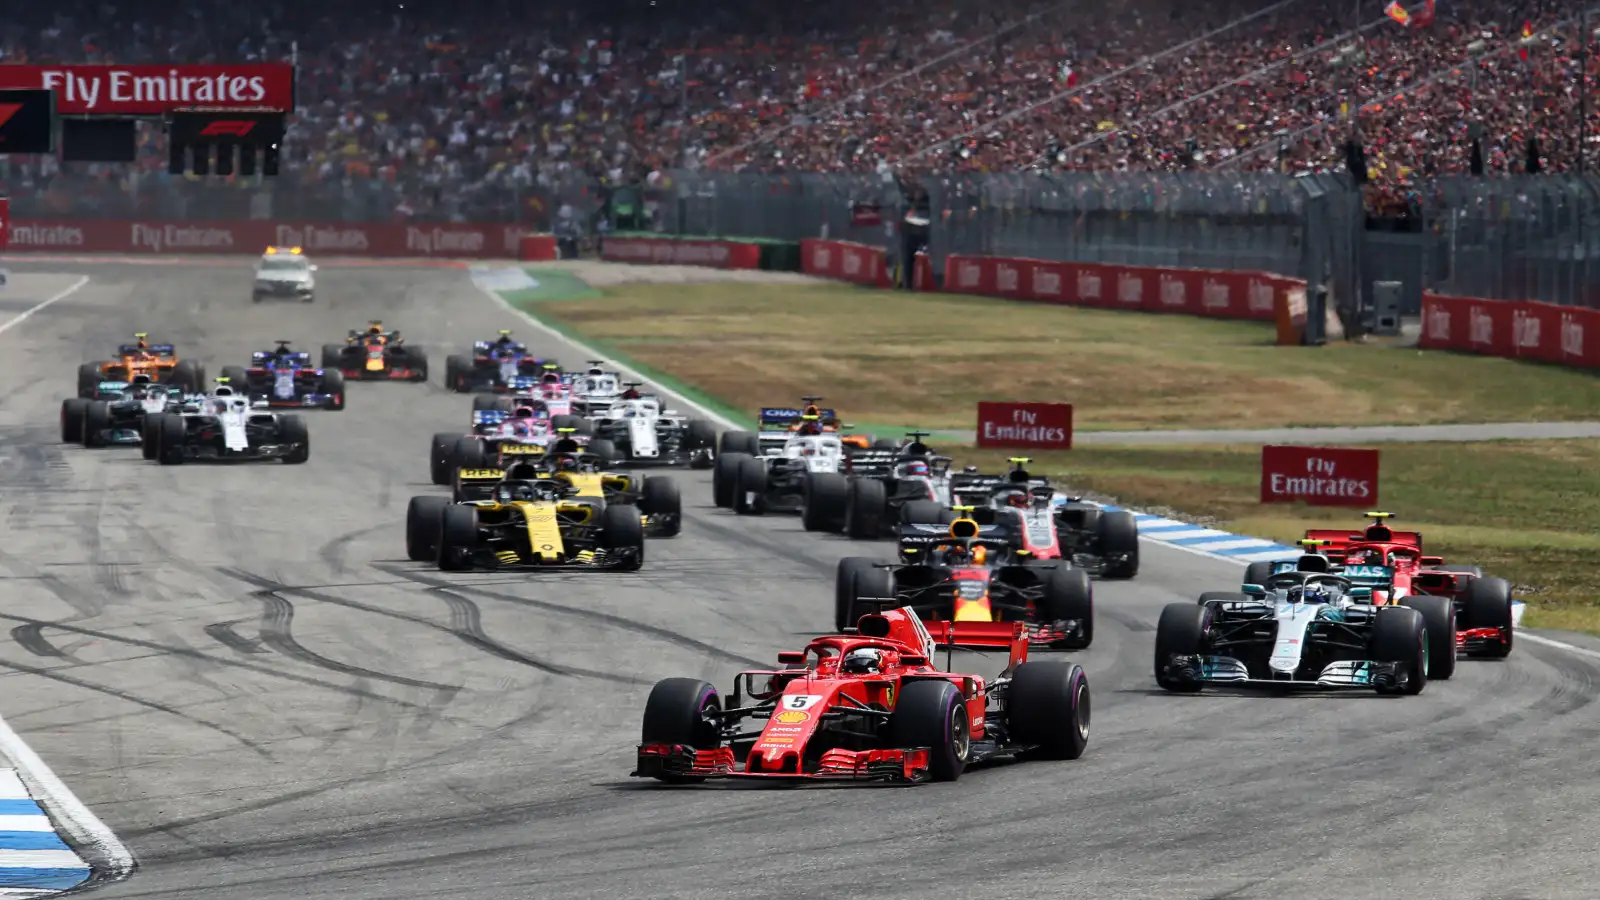 Ferrari's Sebastian Vettel leads the 2018 German Grand Prix. Hockenheim, Germany July 2018.